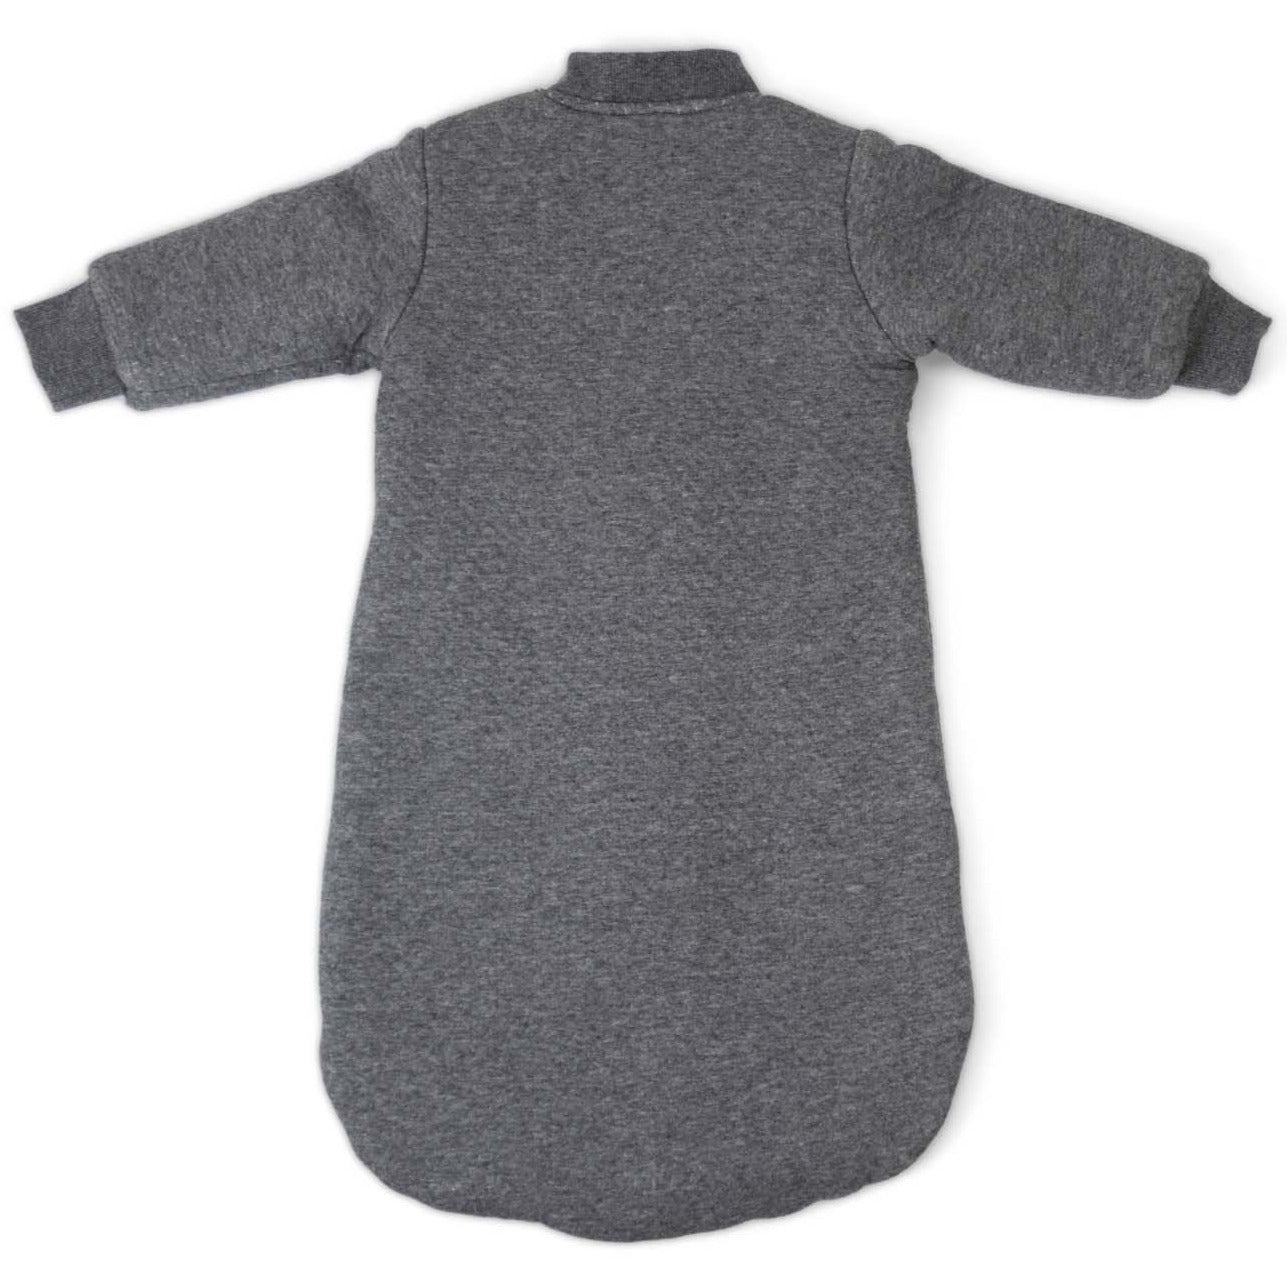 Charcoal Sleeping Bag with Arms 3.0TOG (6-18 Months) | babystudio